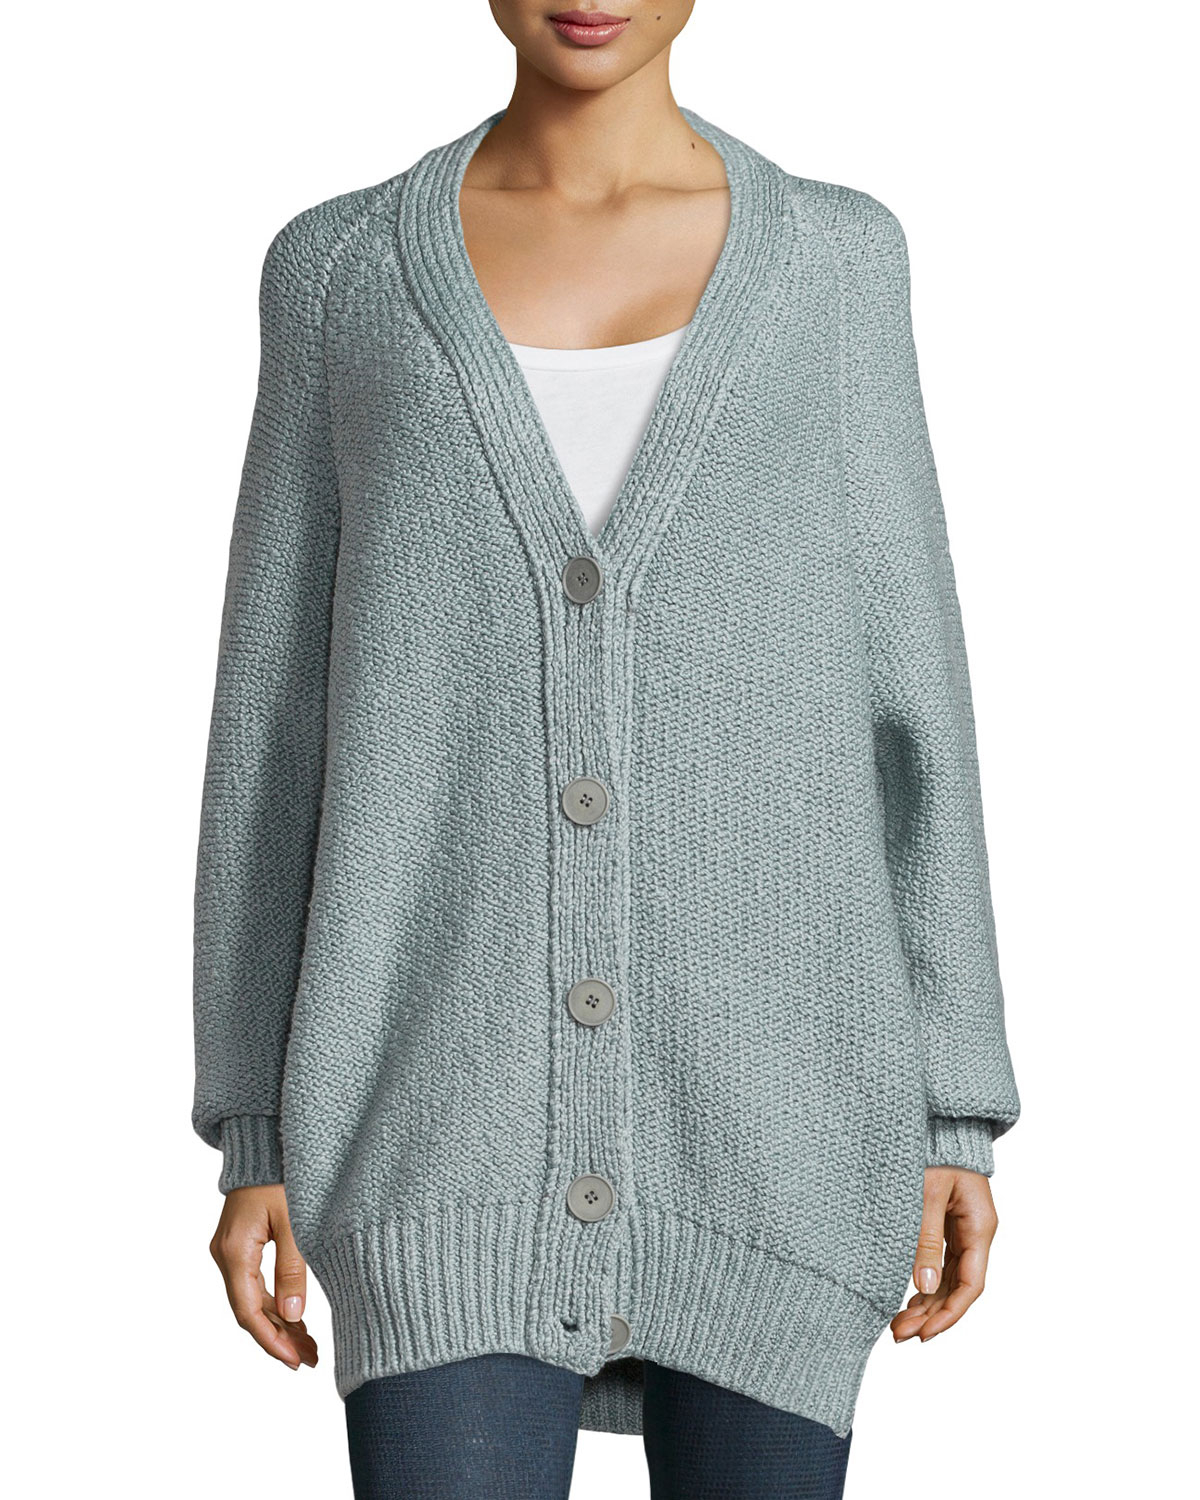 Stella mccartney Oversized Cotton Cardigan Sweater in Gray | Lyst